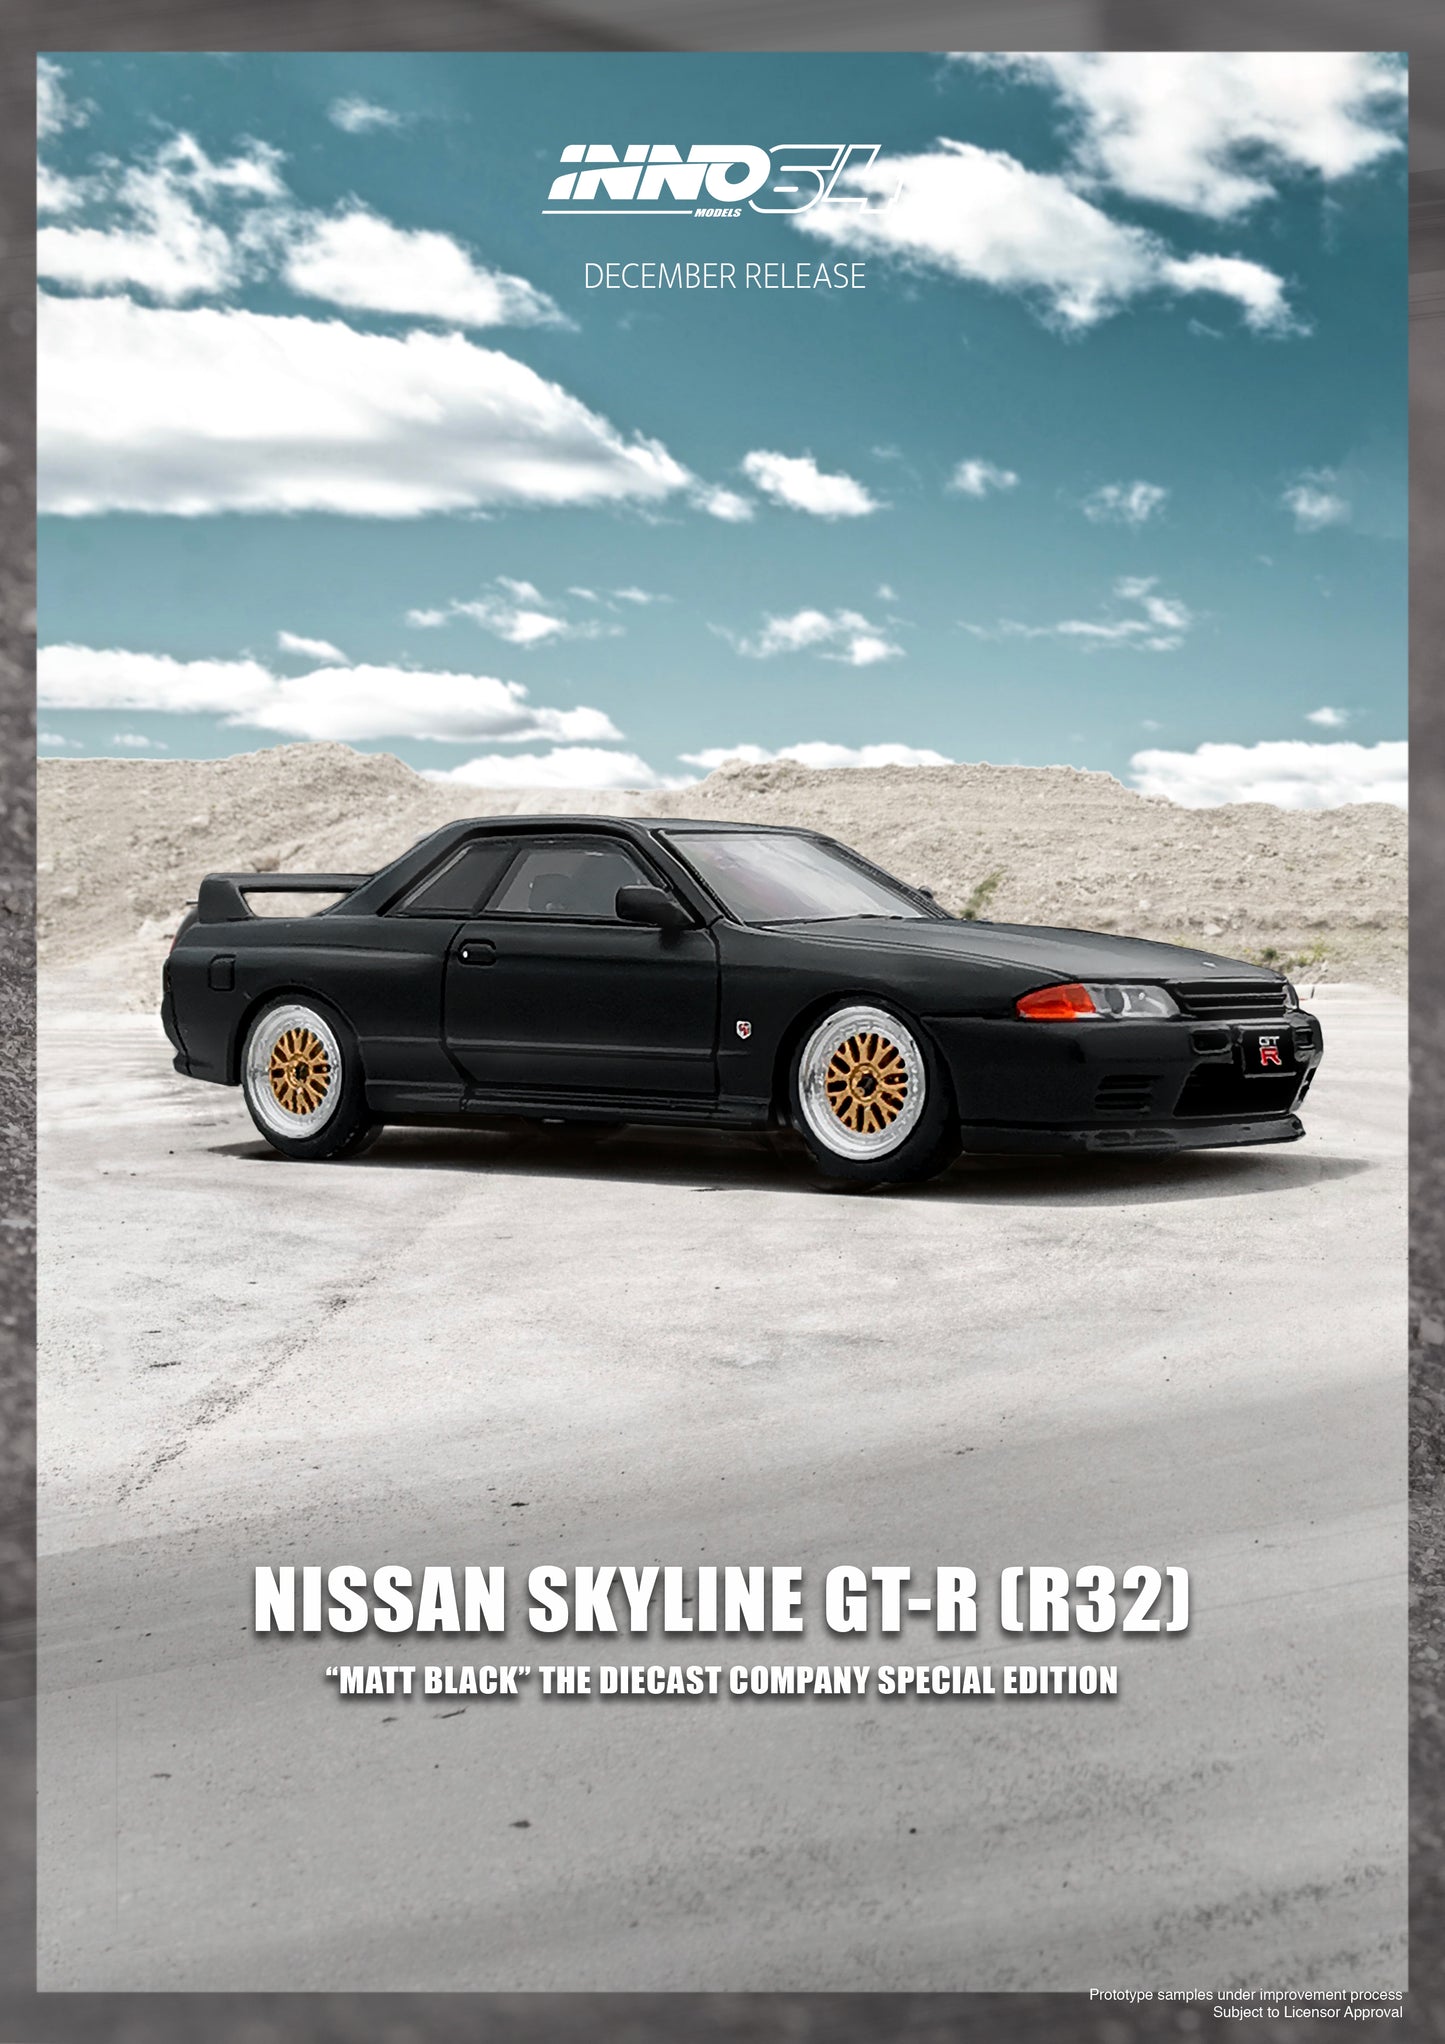 Inno64 1/64 NISSAN SKYLINE GT-R (R32) Matt Black The Diecast Company Special Edition
Limited Quantity Production